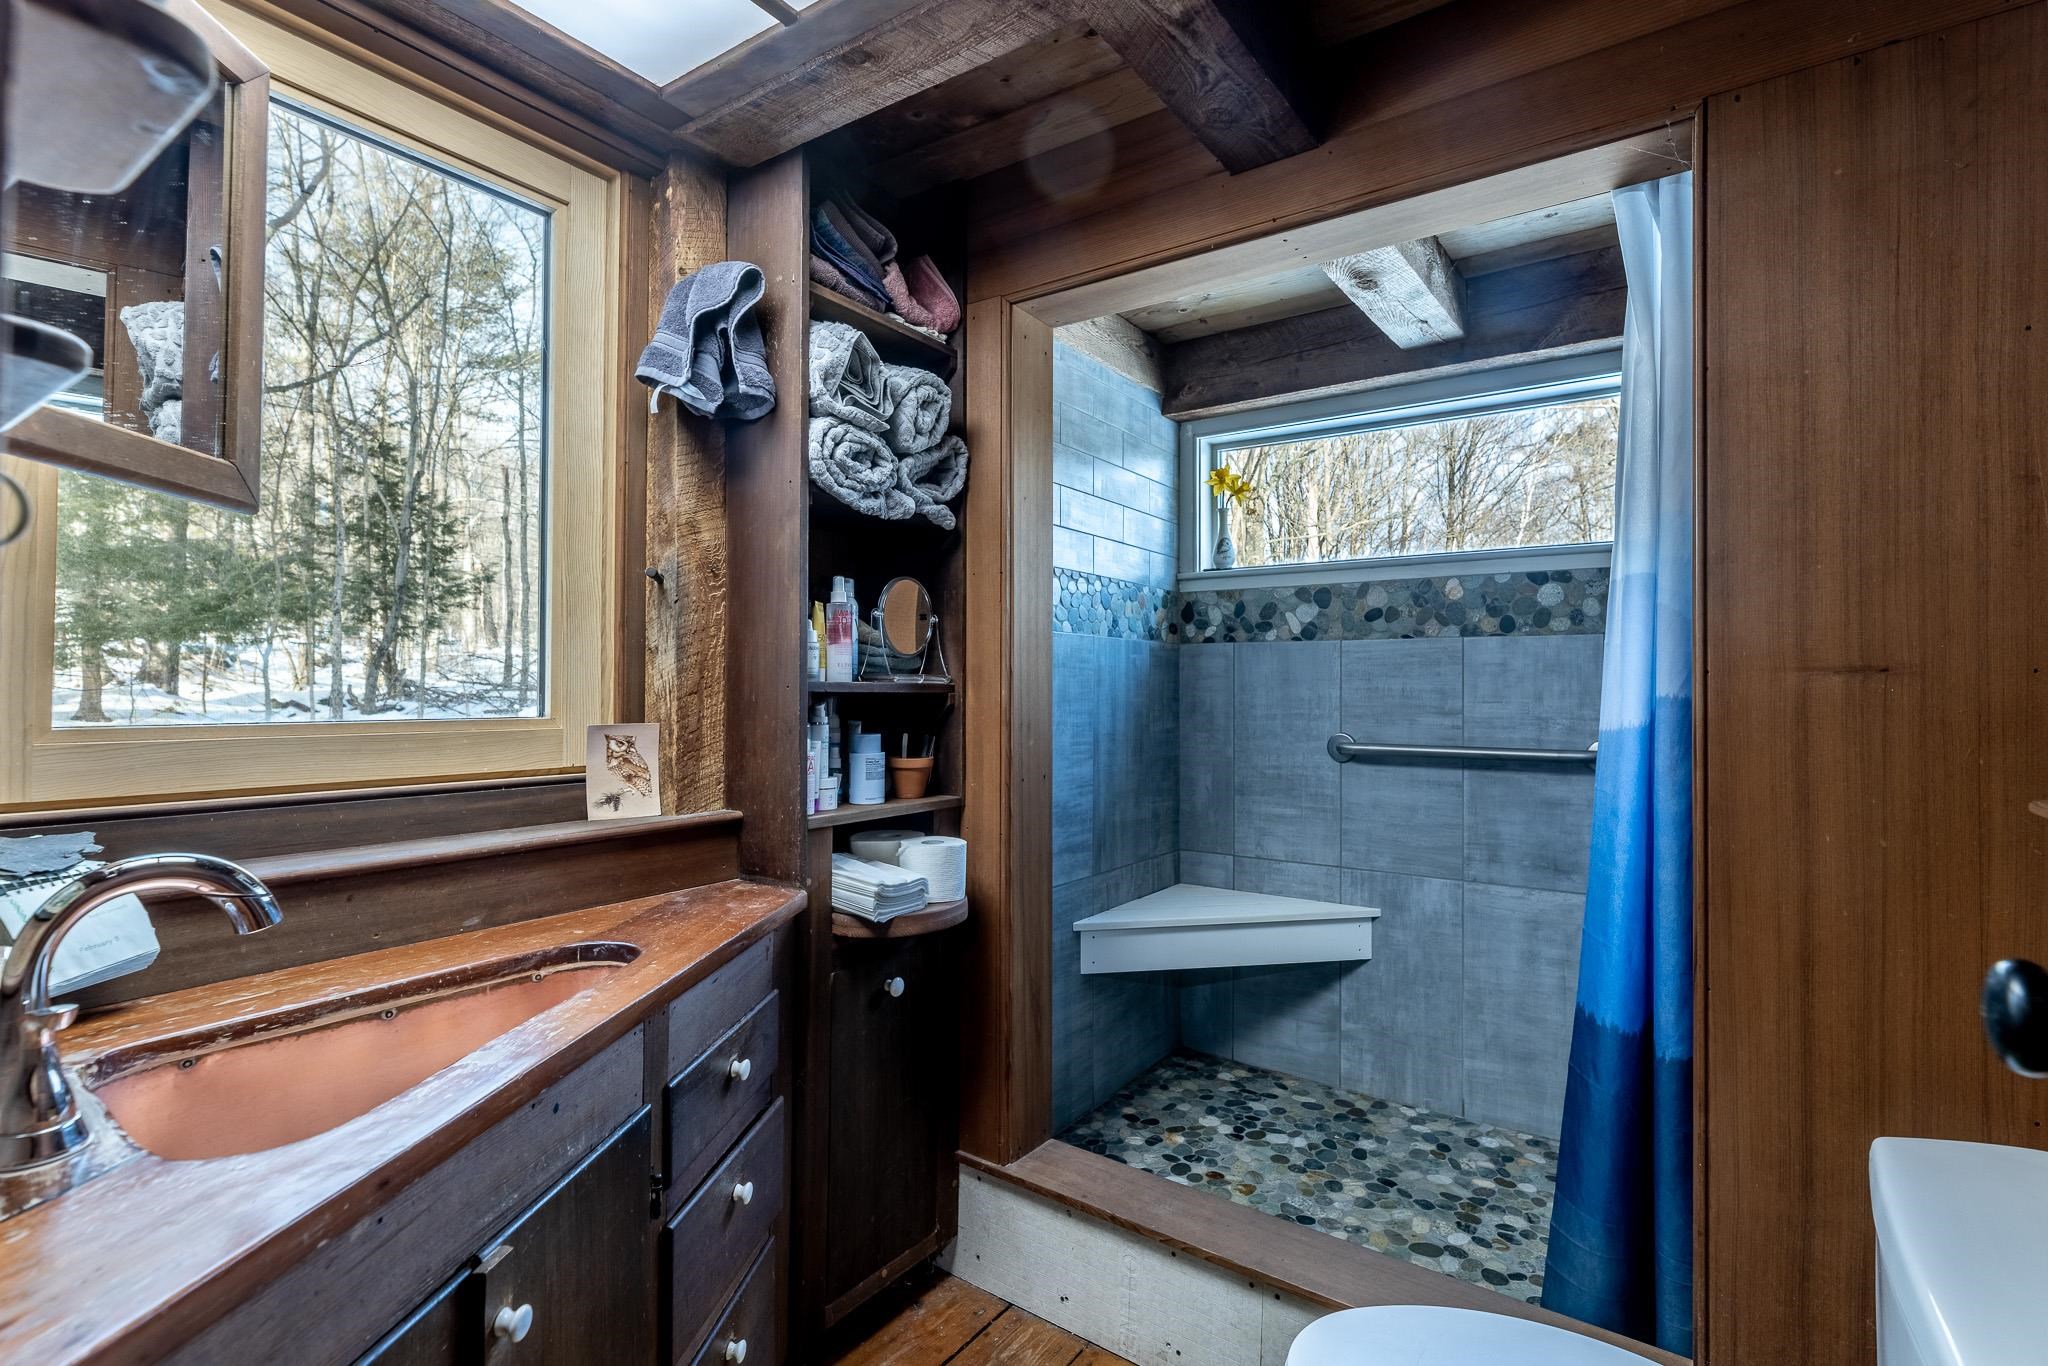 Bathroom, showing great tile work in shower